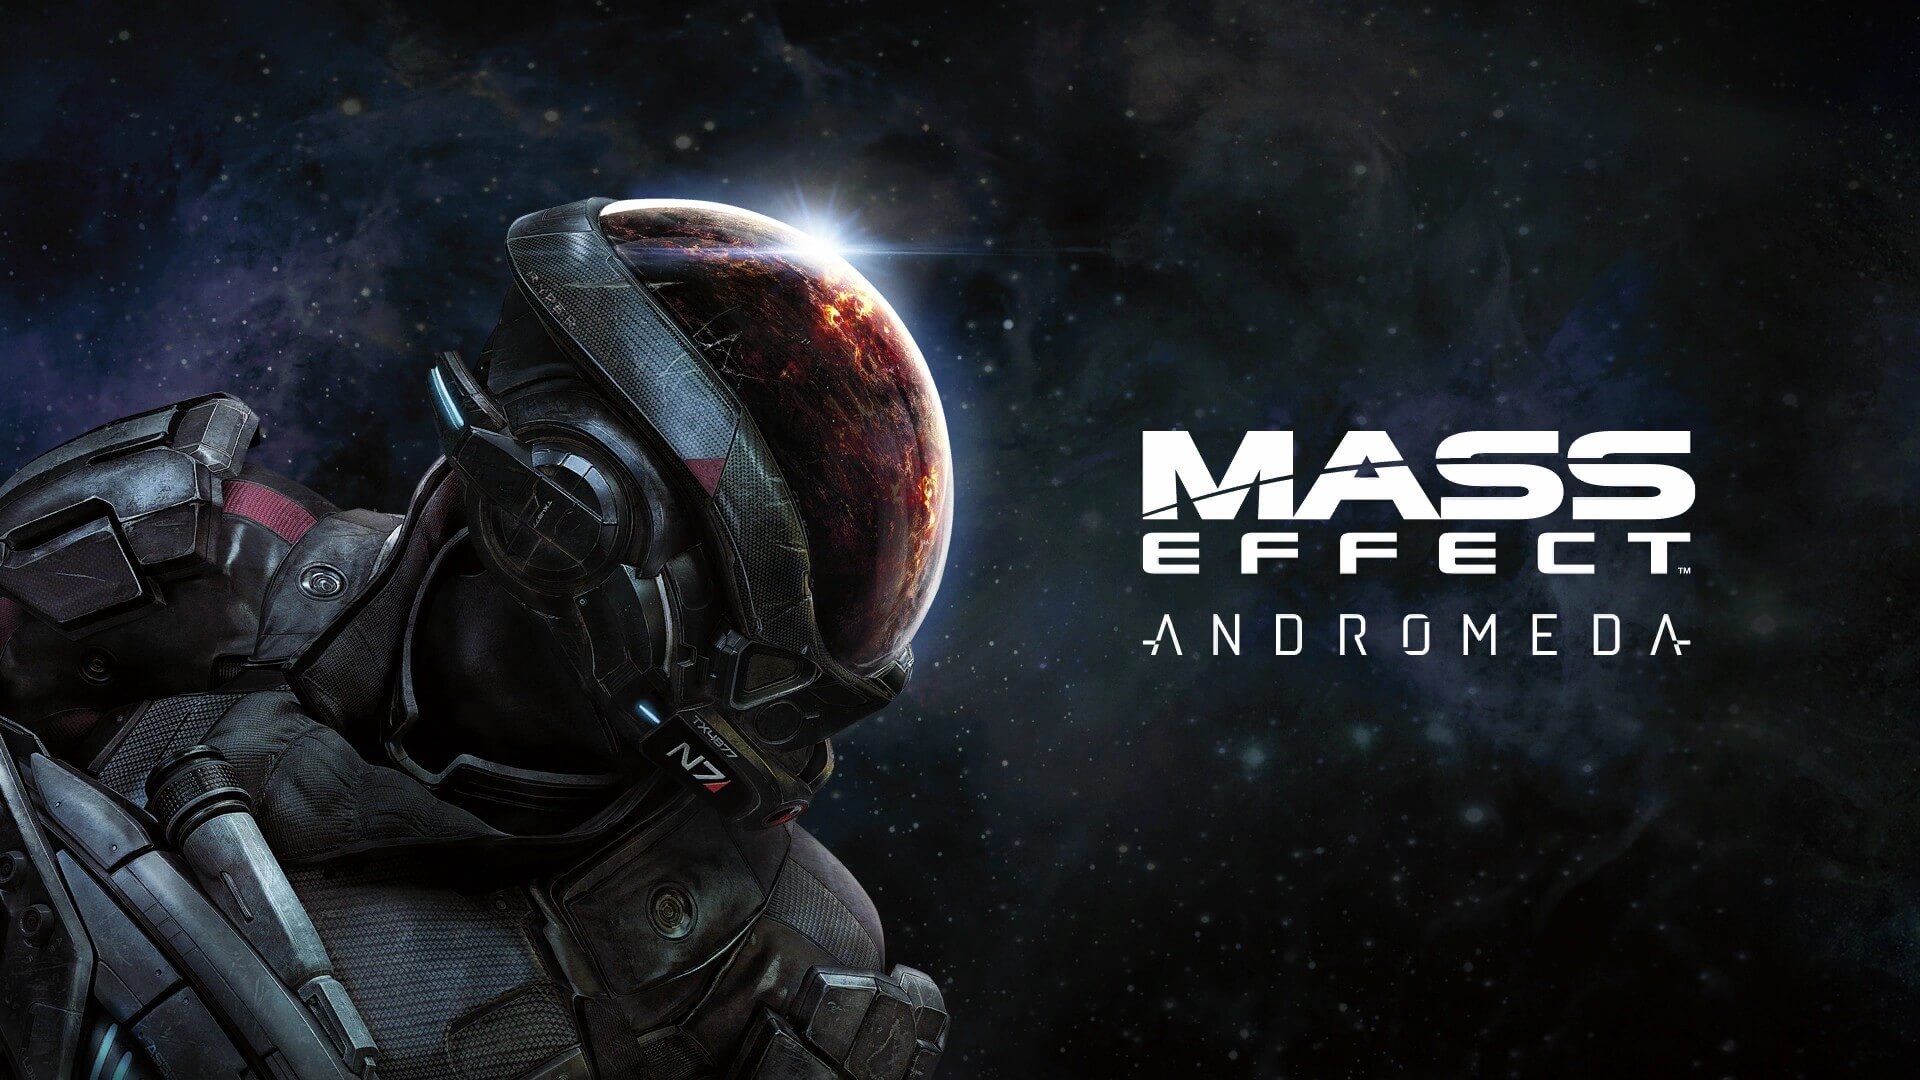 Mass effect - Andromeda